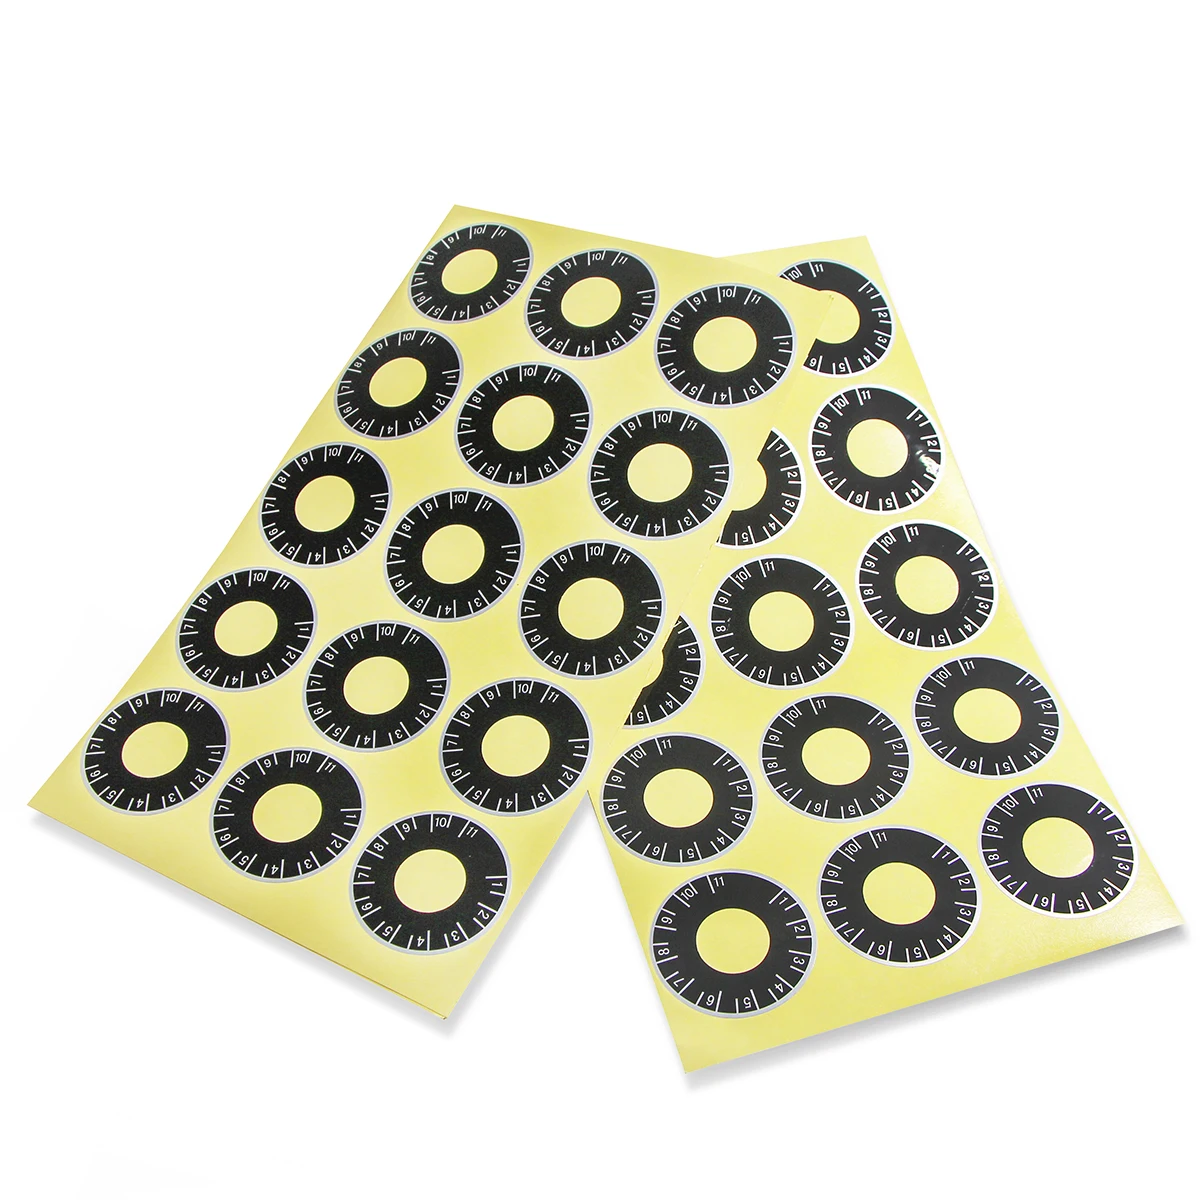 custom waterproof polycarbonate lexan label logo touch panel control sticker keypad for machine Electronics rotary switch